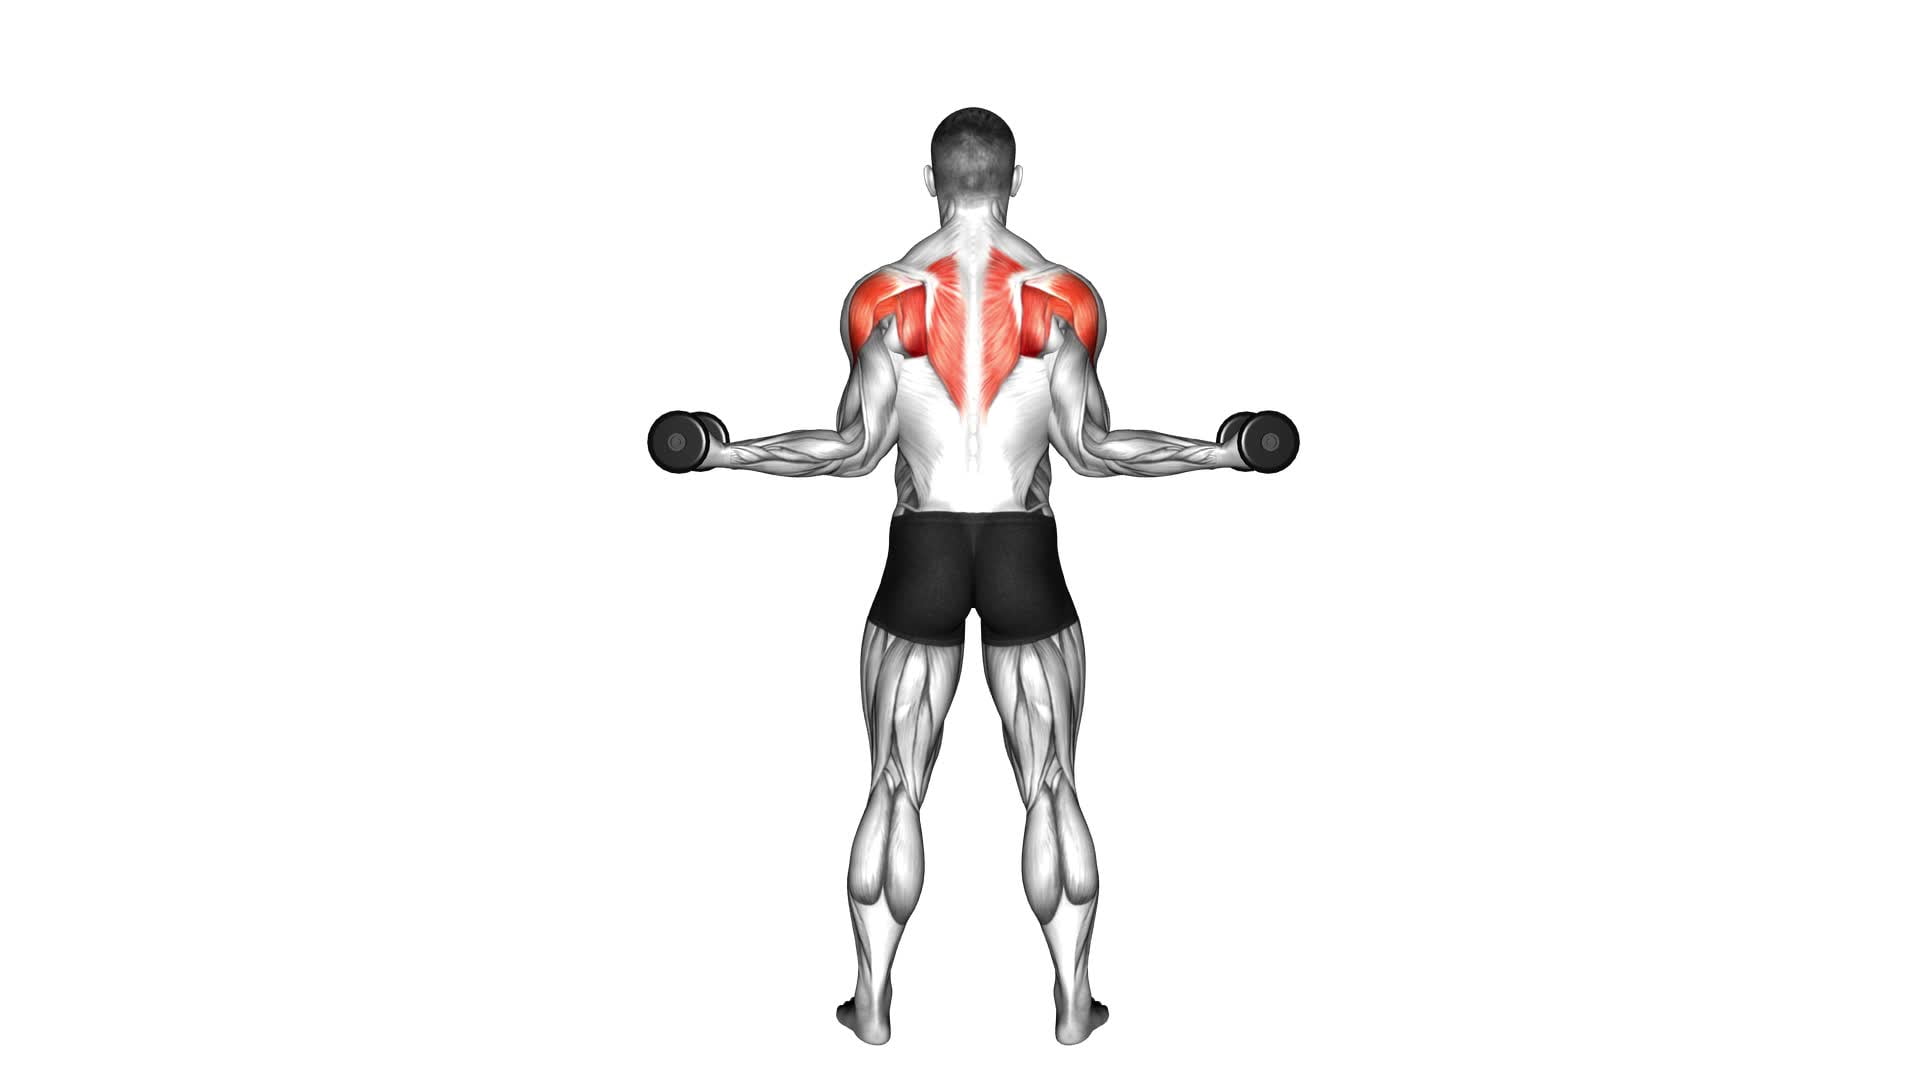 Dumbbell Standing Scapular External Rotation (male) - Video Exercise Guide & Tips